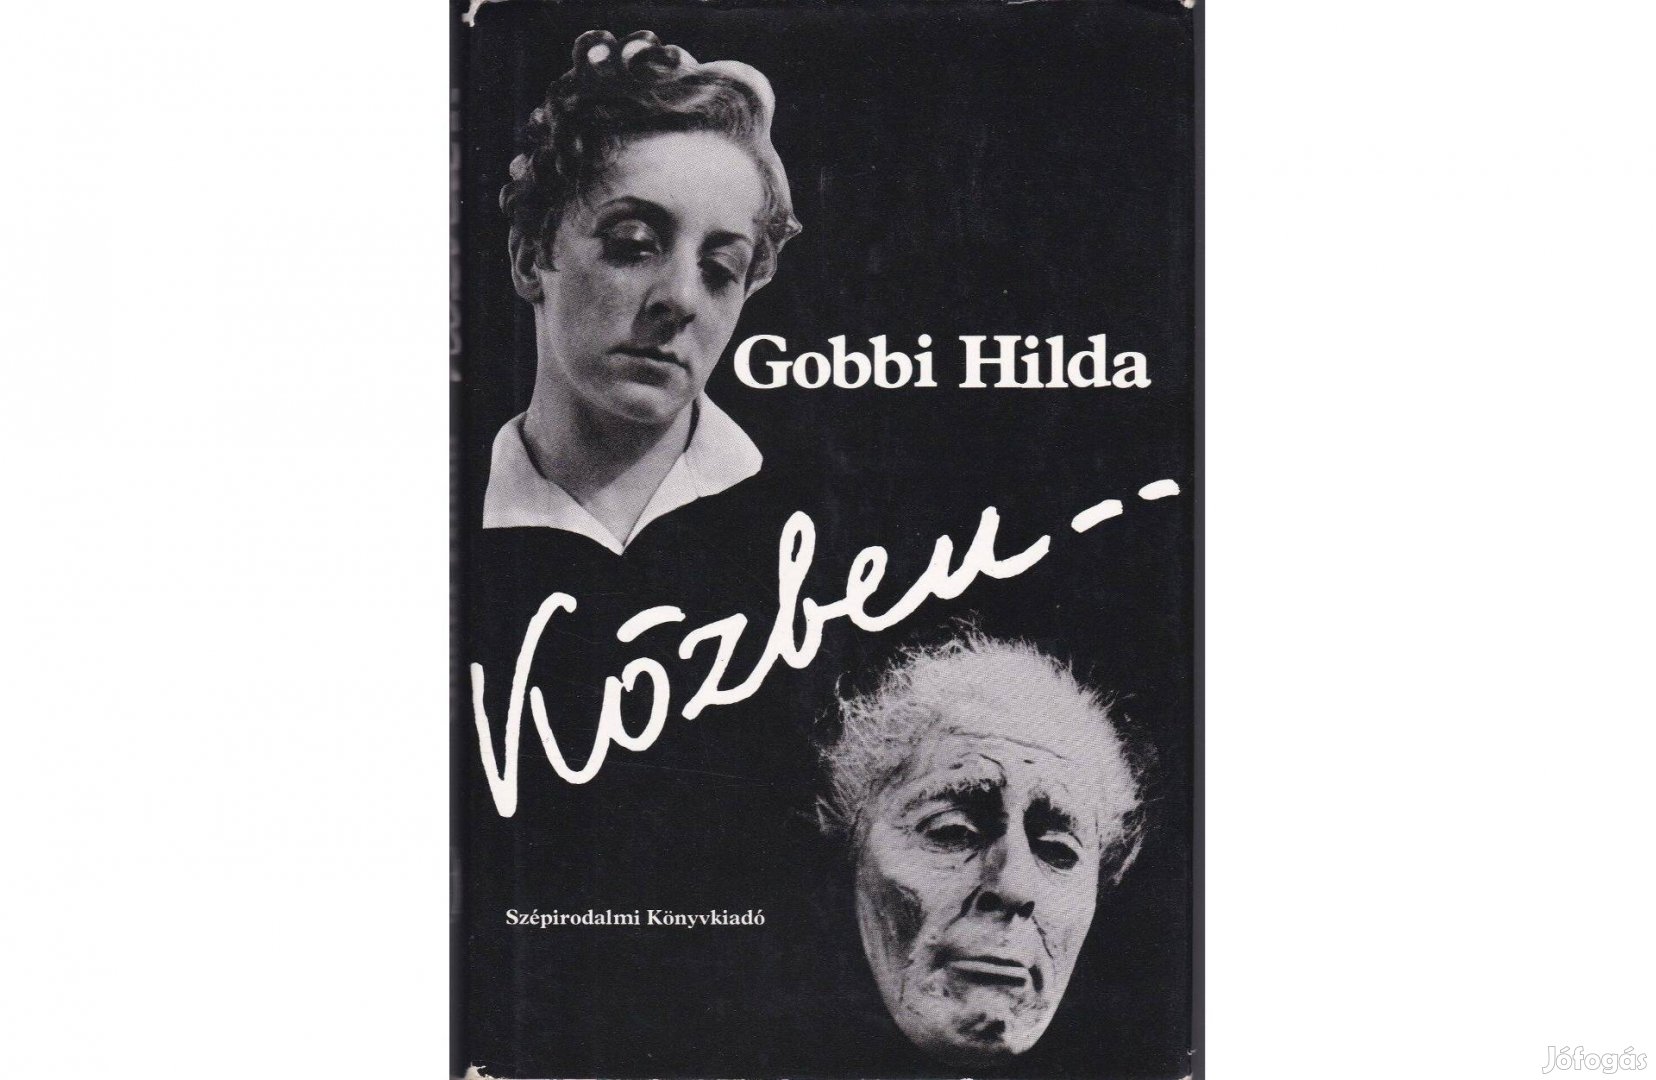 Gobbi Hilda - Közben